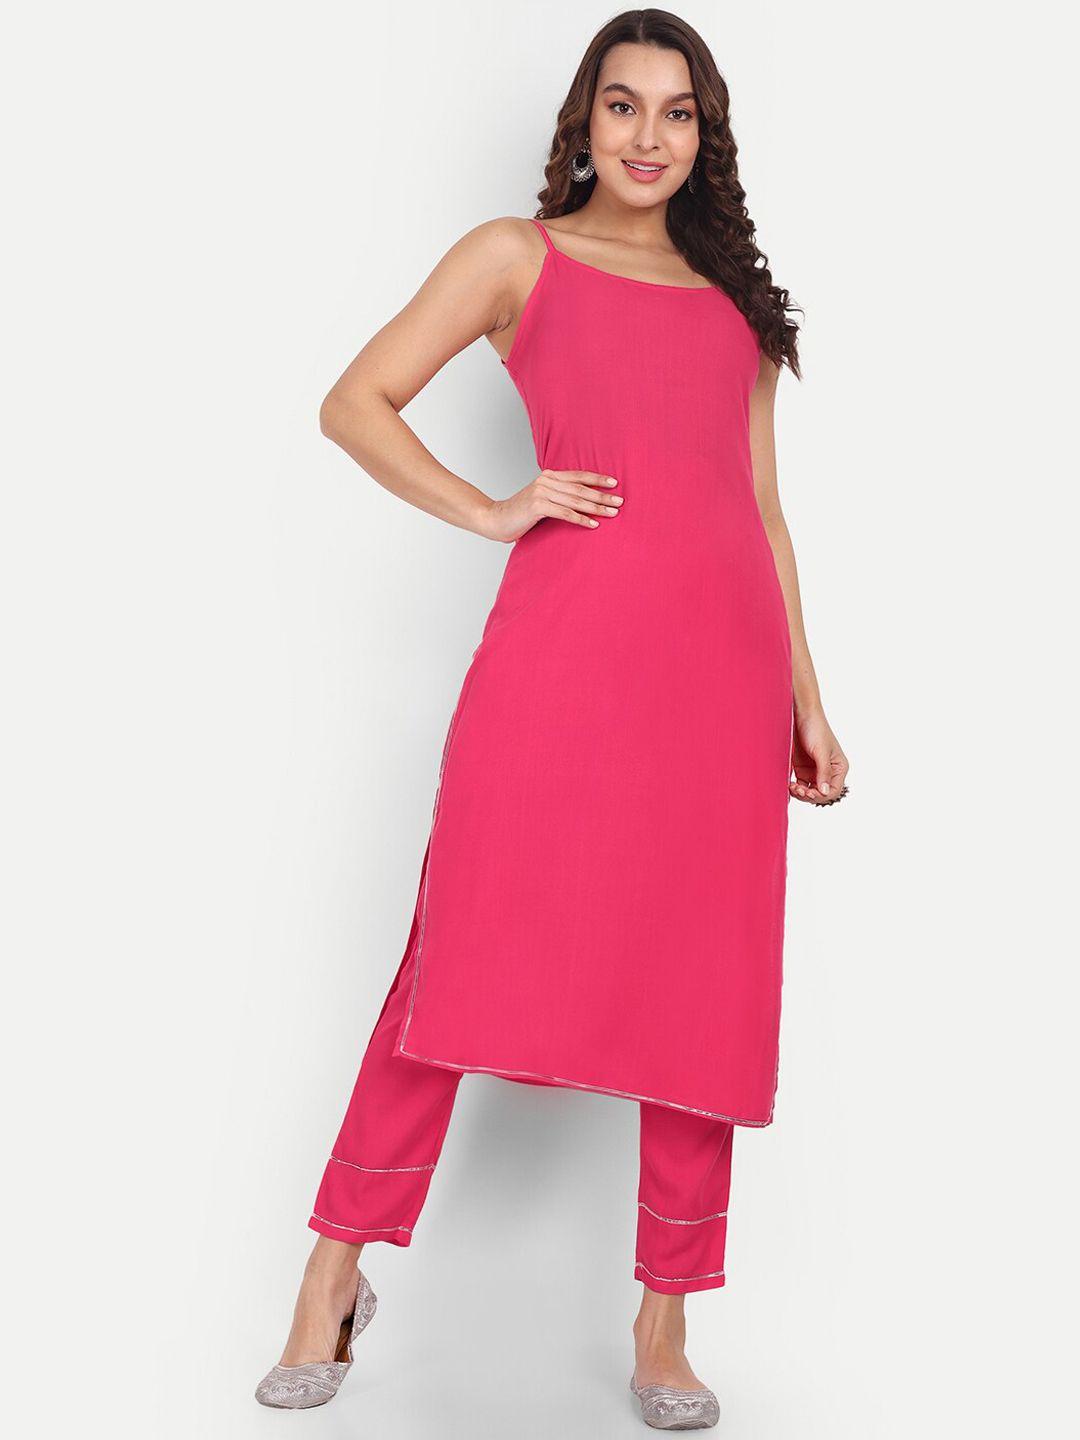 aarti fashion women pink kurta with trousers